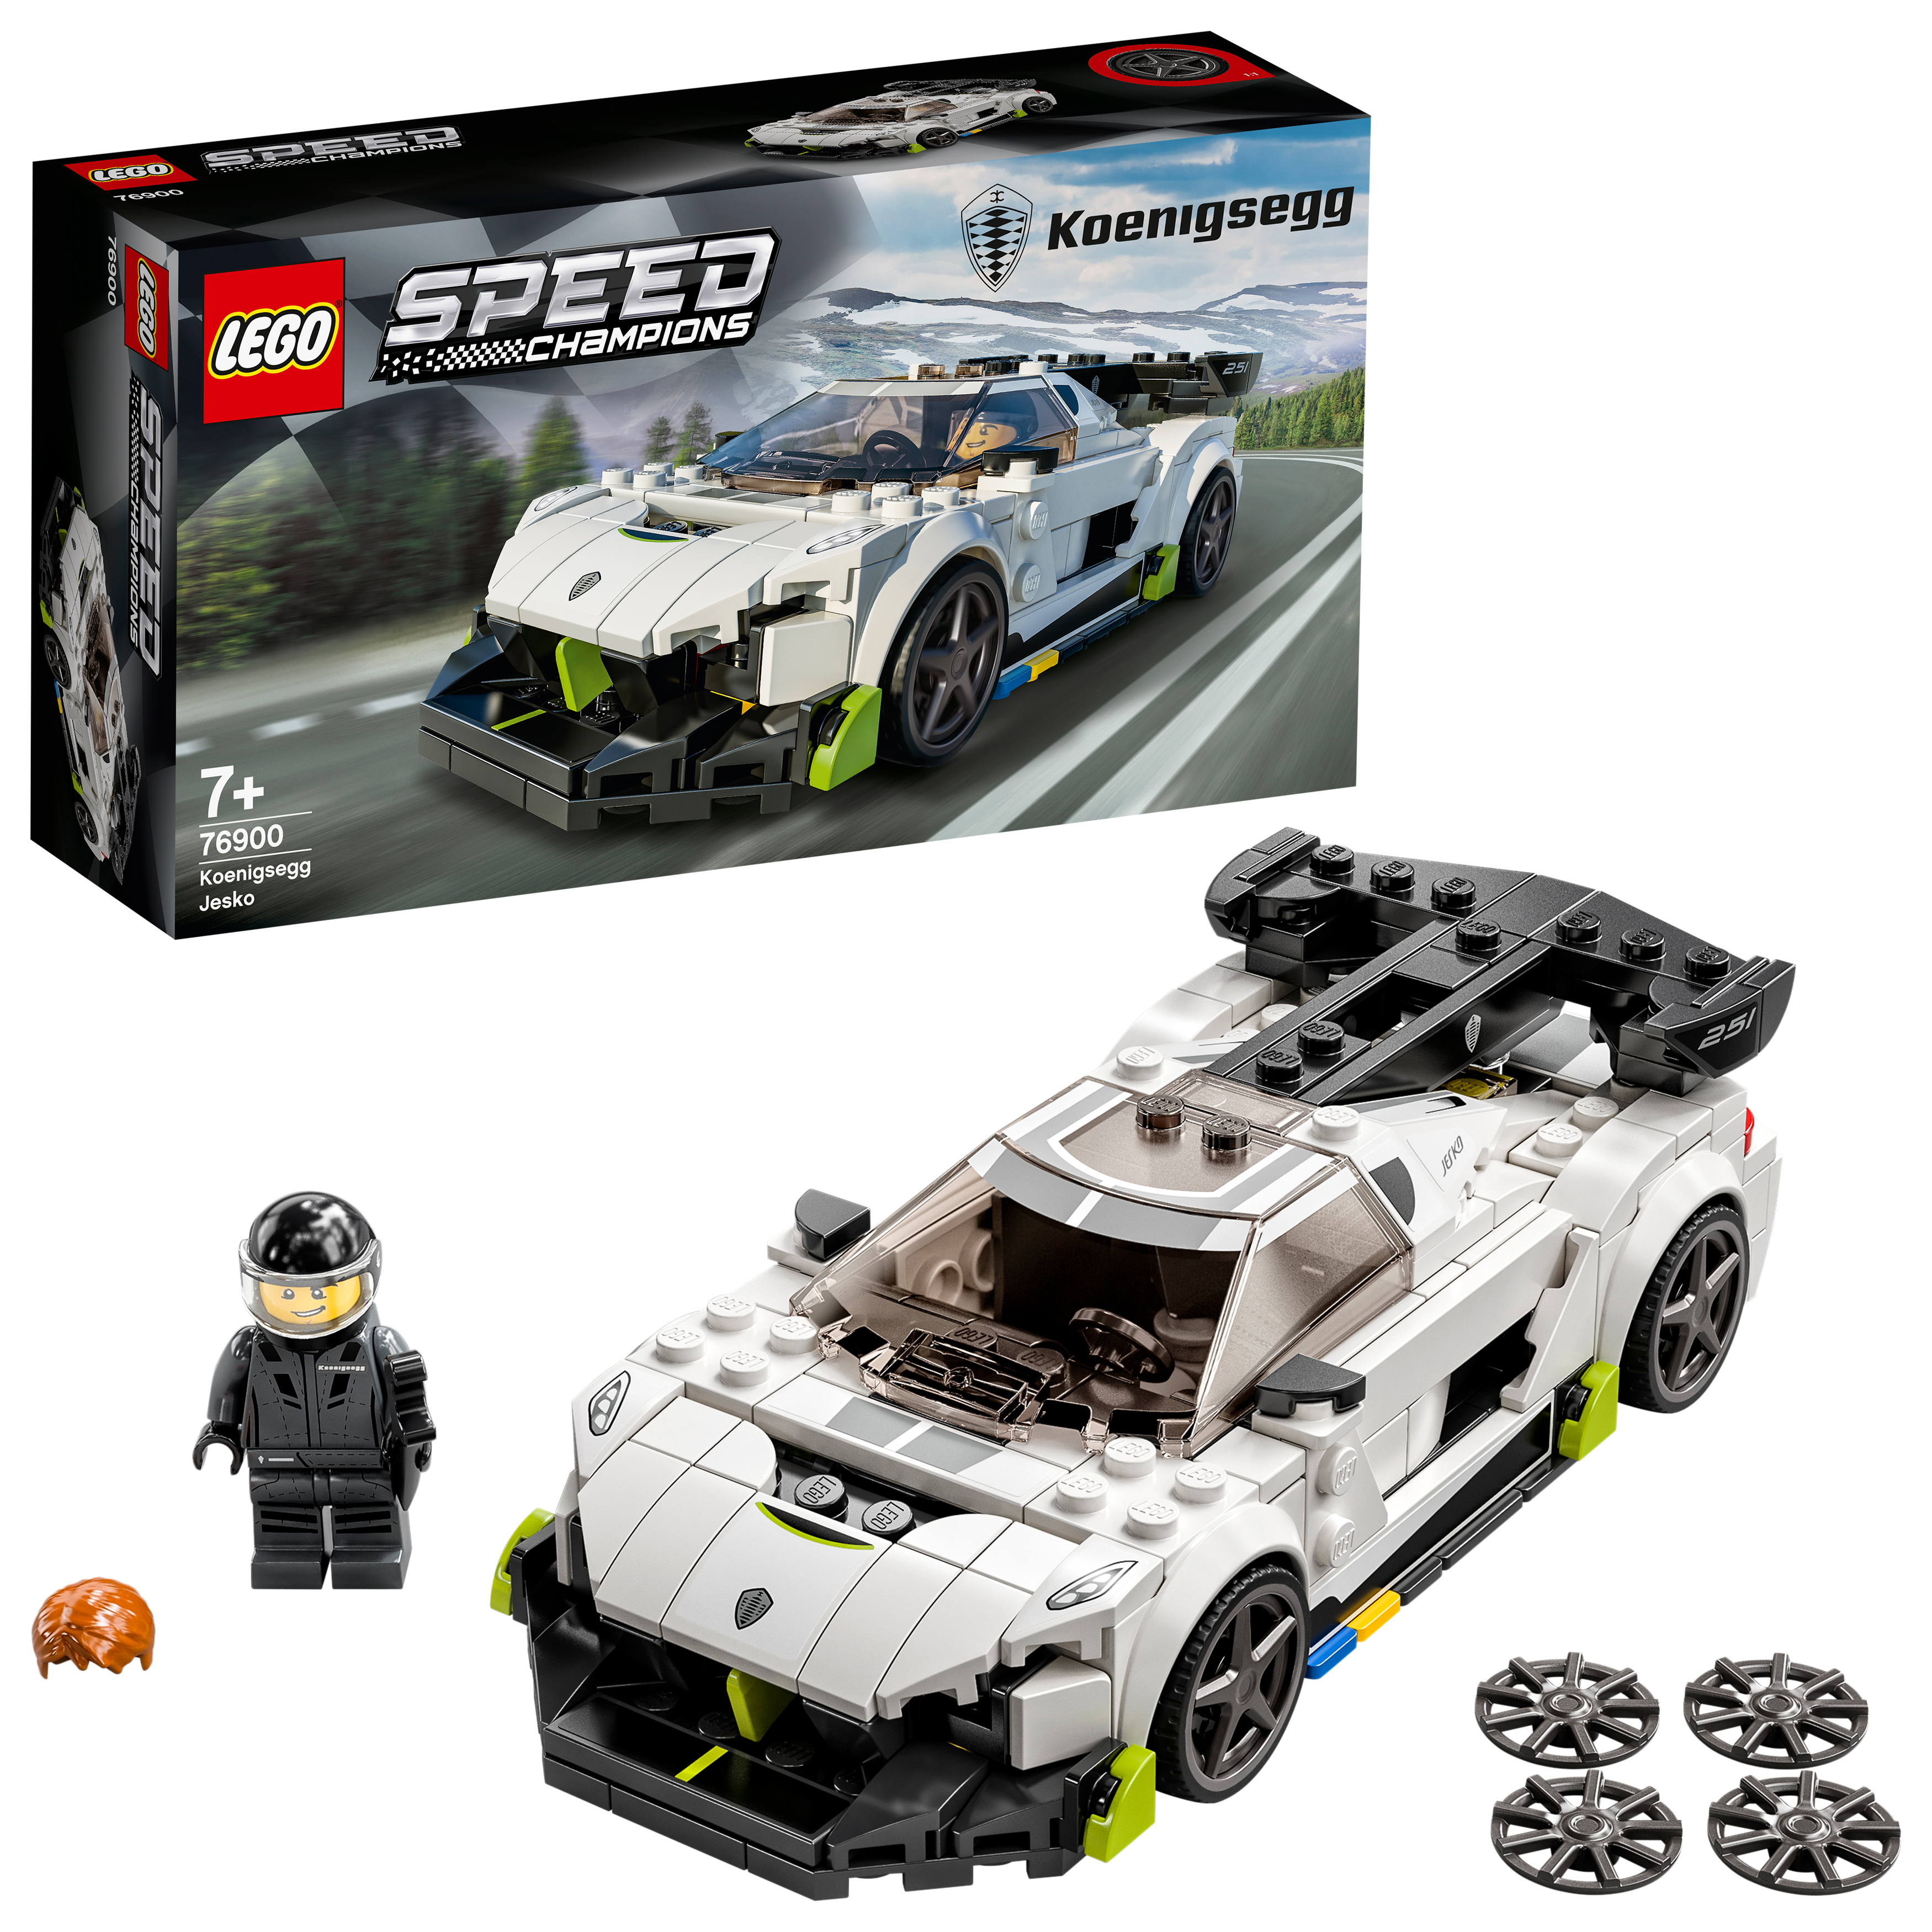 LEGO 76900 SPEED CHAMPIONS - Koenigsegg Jesko